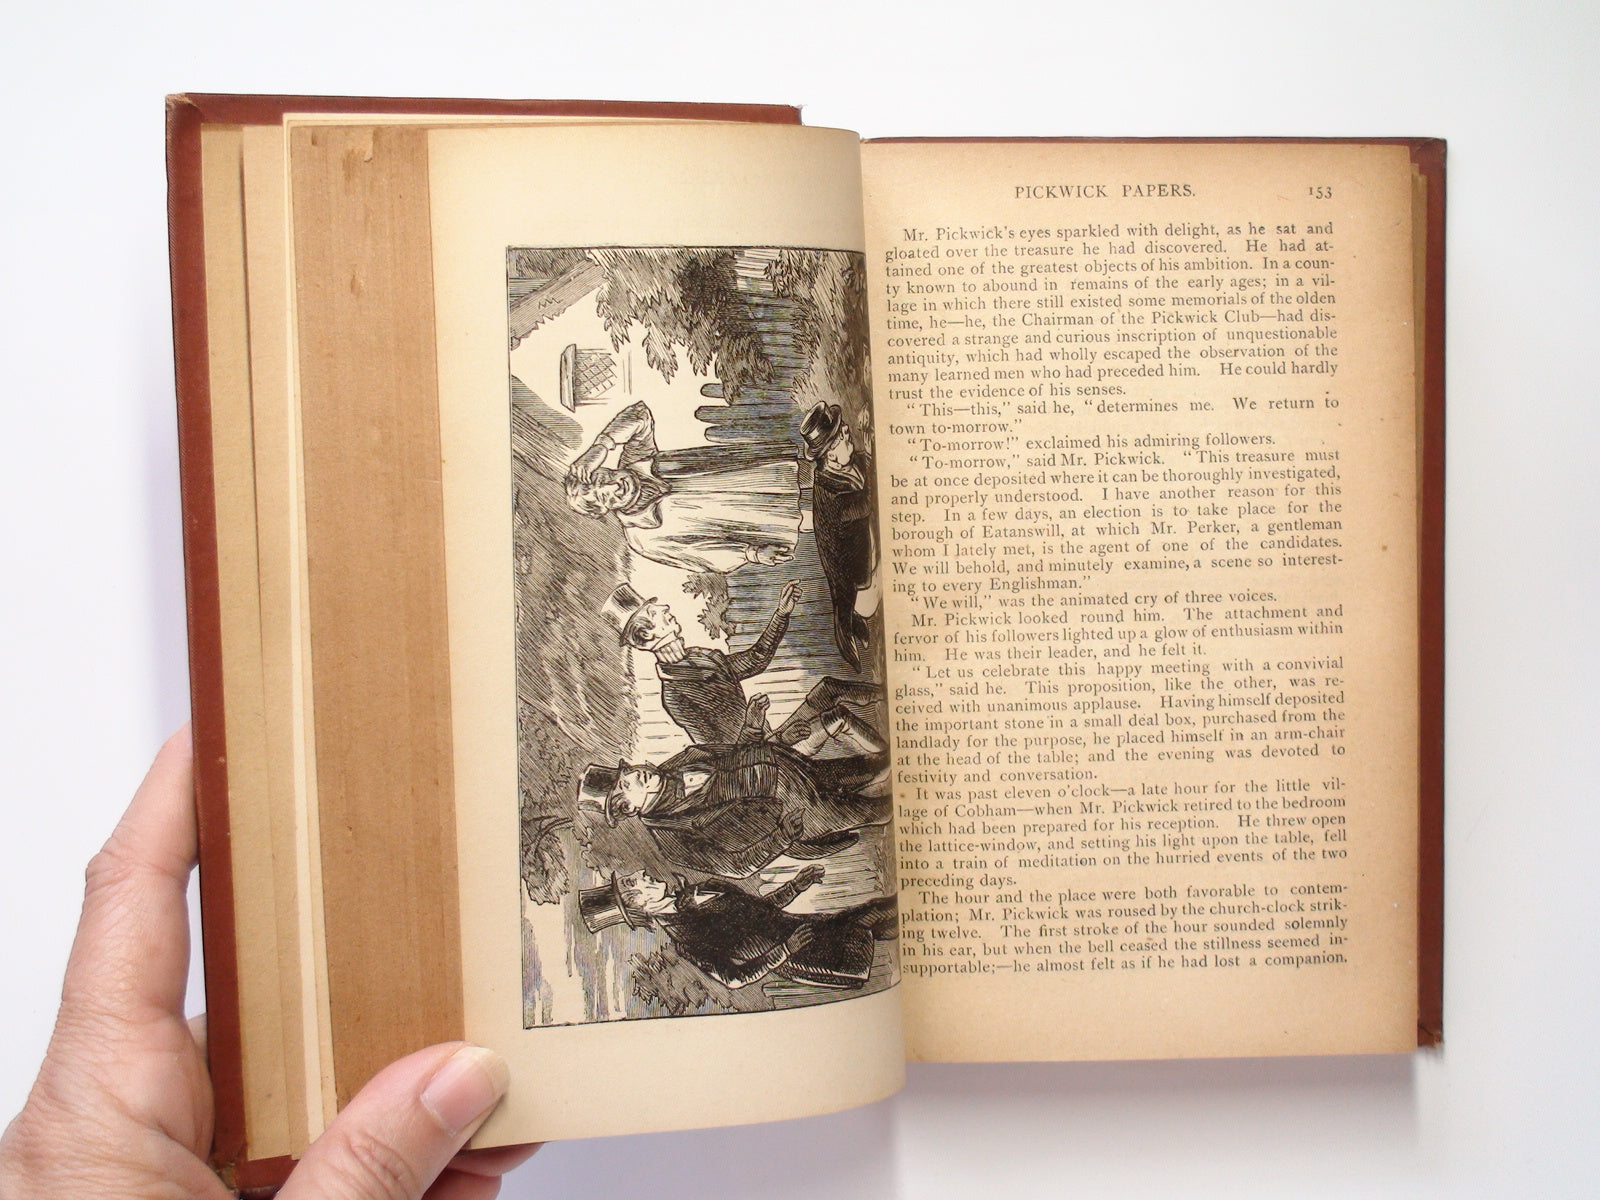 Set of Charles Dickens Novels, Illustrated, 8 Volumes, Incomplete Set, c1895